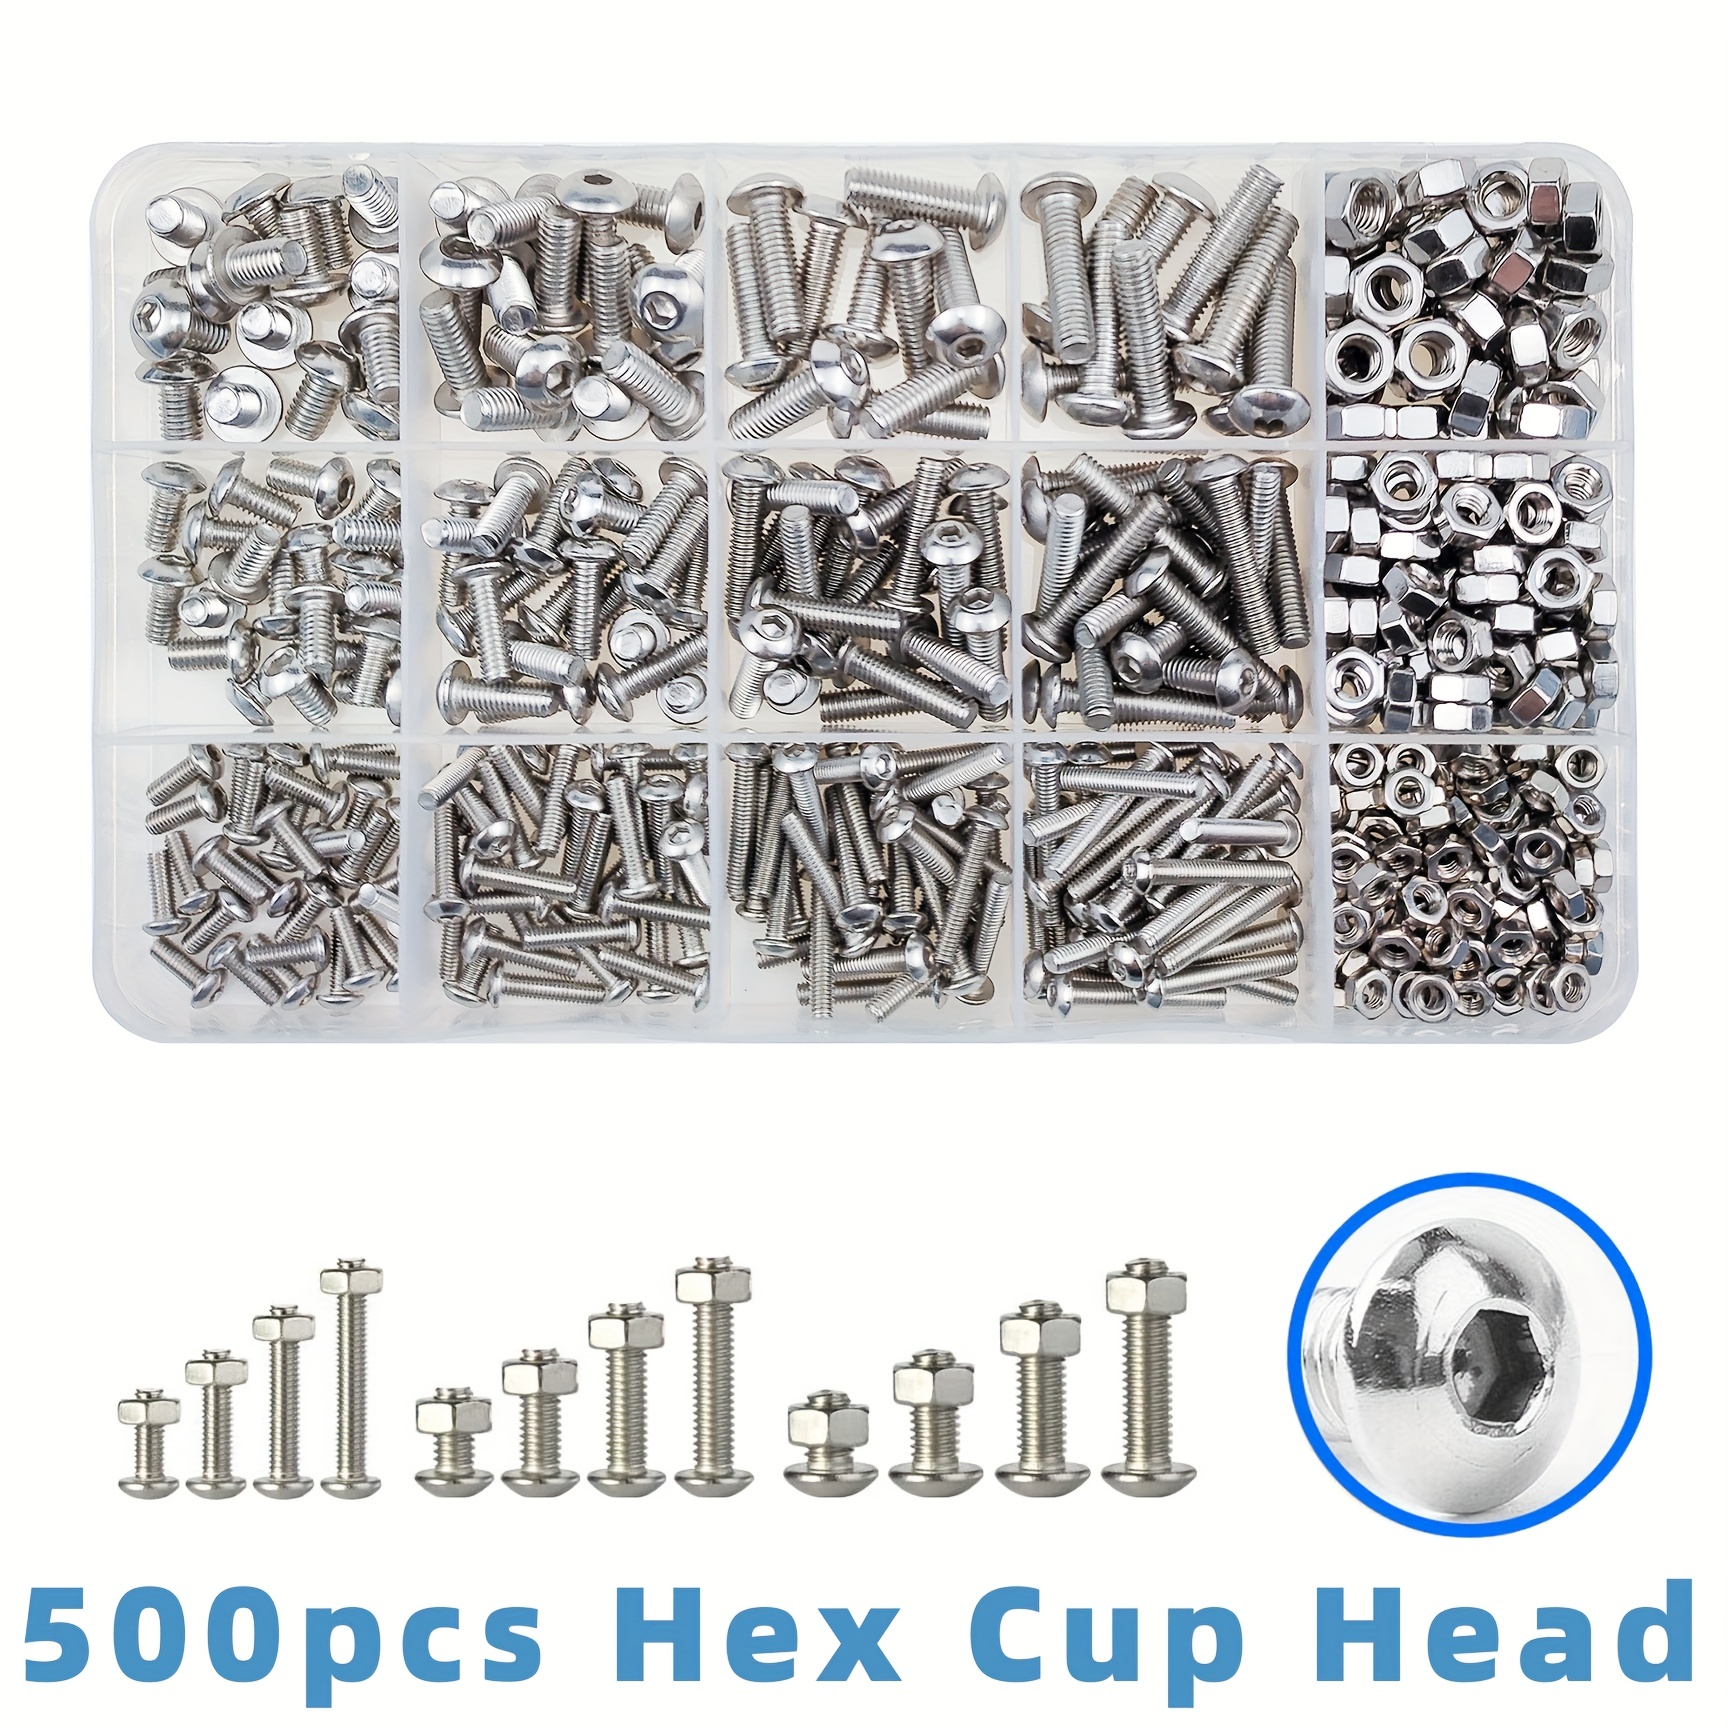 

500pcs 304 Stainless Steel Boxed Set, M3m4m5 Pan Head Screws, Bolts Nuts Round Head Hexagon Screws